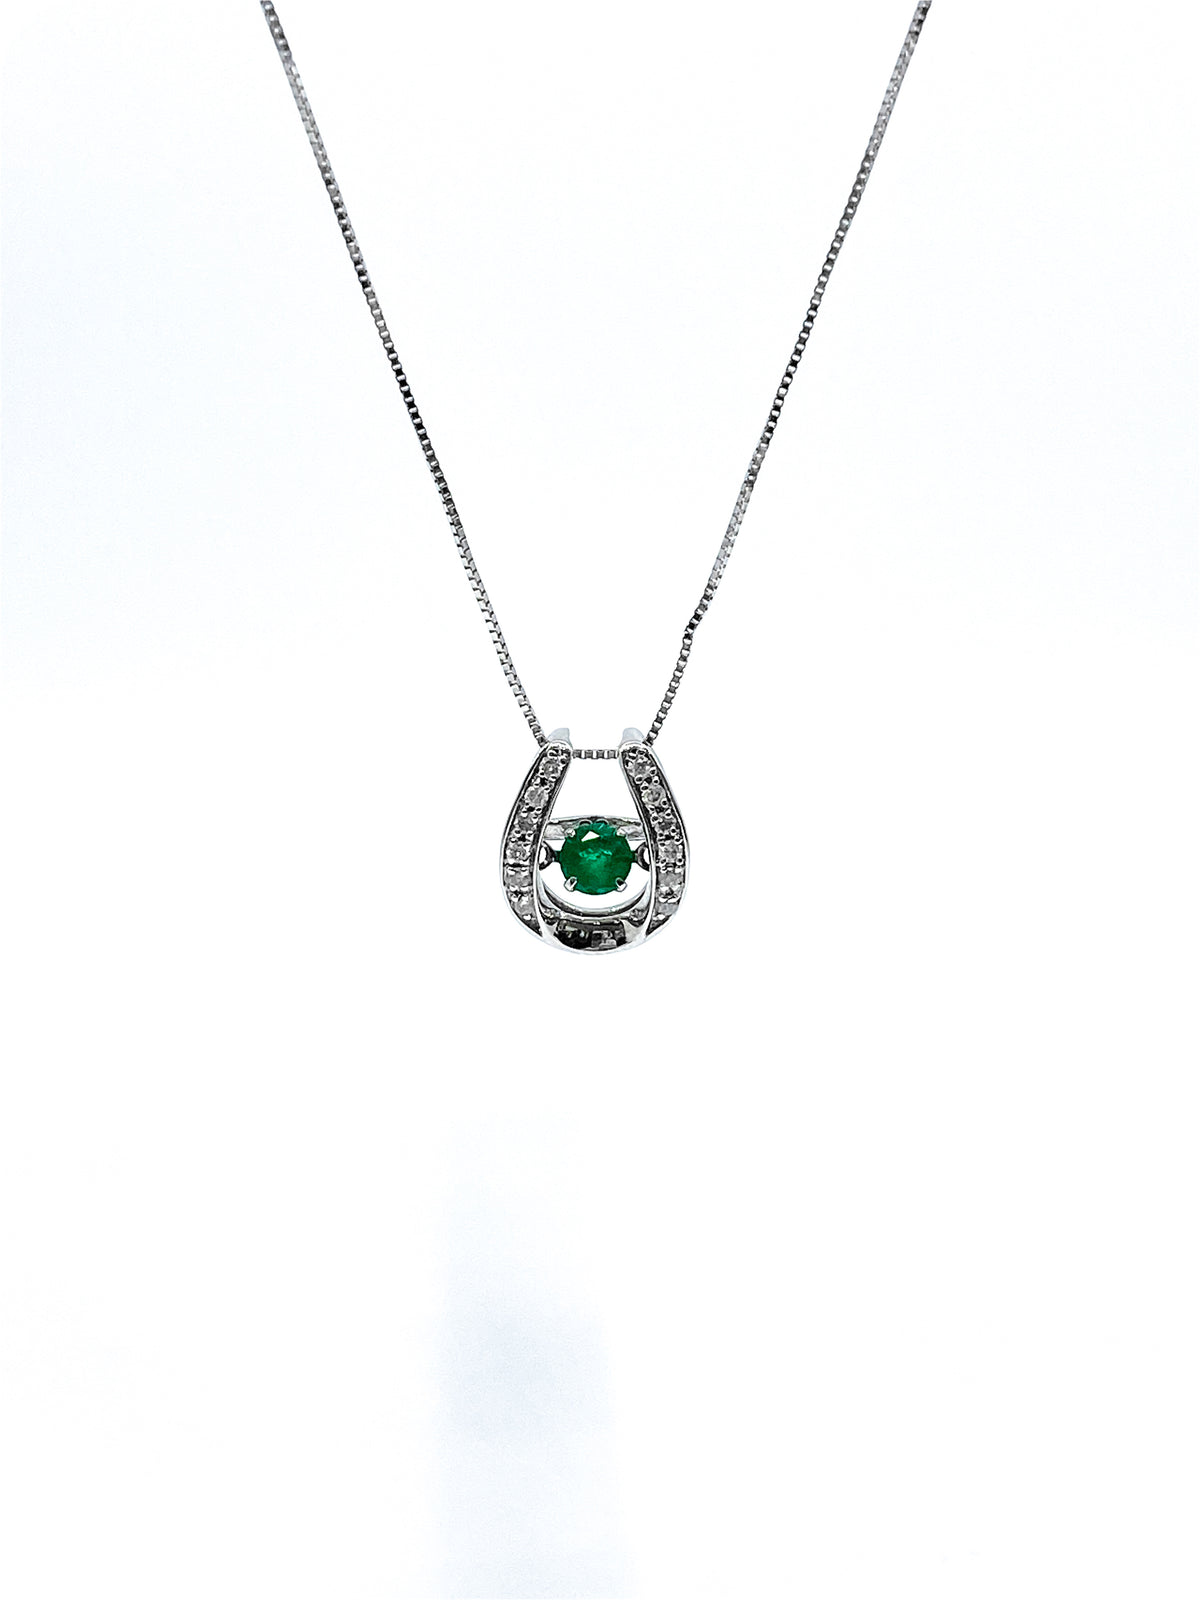 10K White Gold 0.15cttw Round Cut Genuine Emerald and0.07cttw Round Cut  Diamonds Necklace, 18”